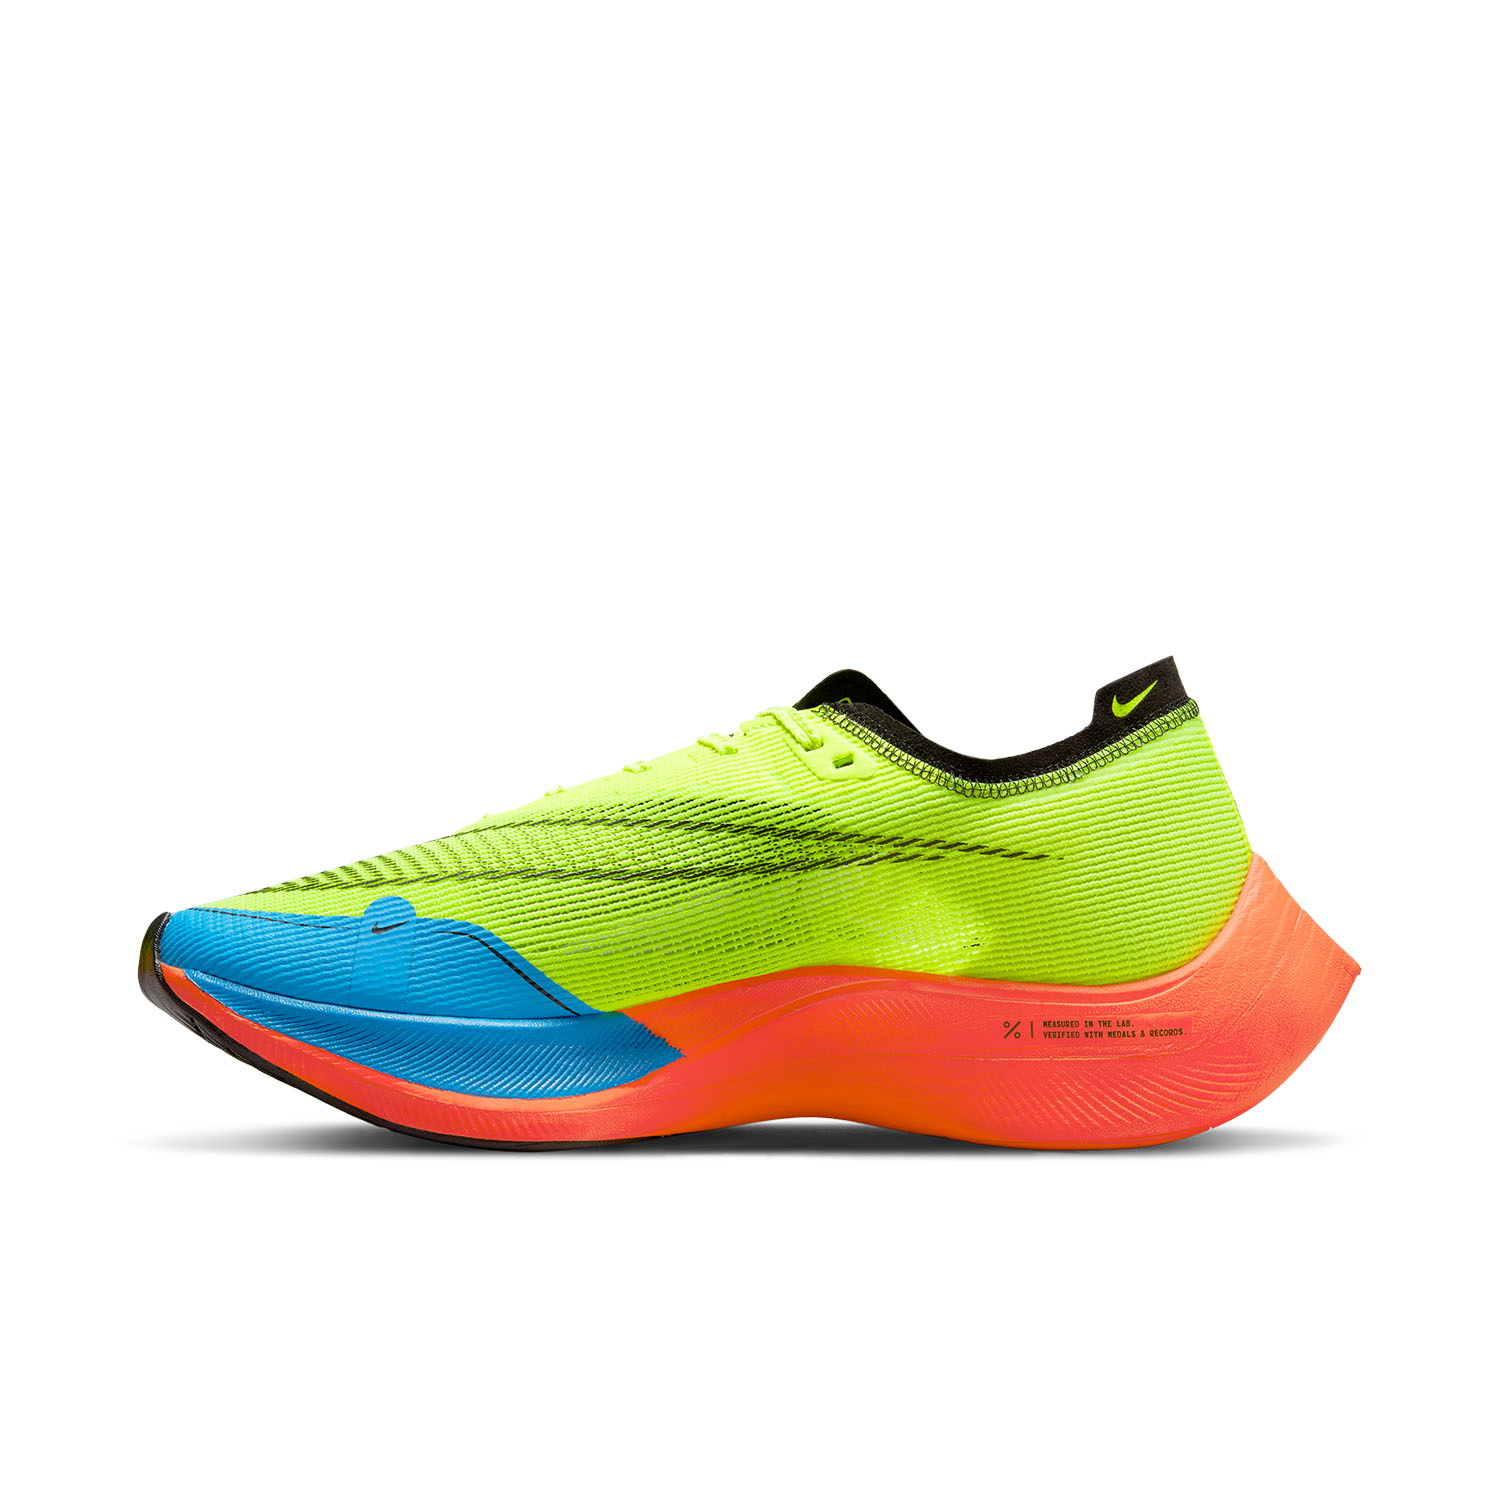 Nike ZoomX Vaporfly Next% 2 - Volt/Black/Bright Crimson/Light Photo Blue